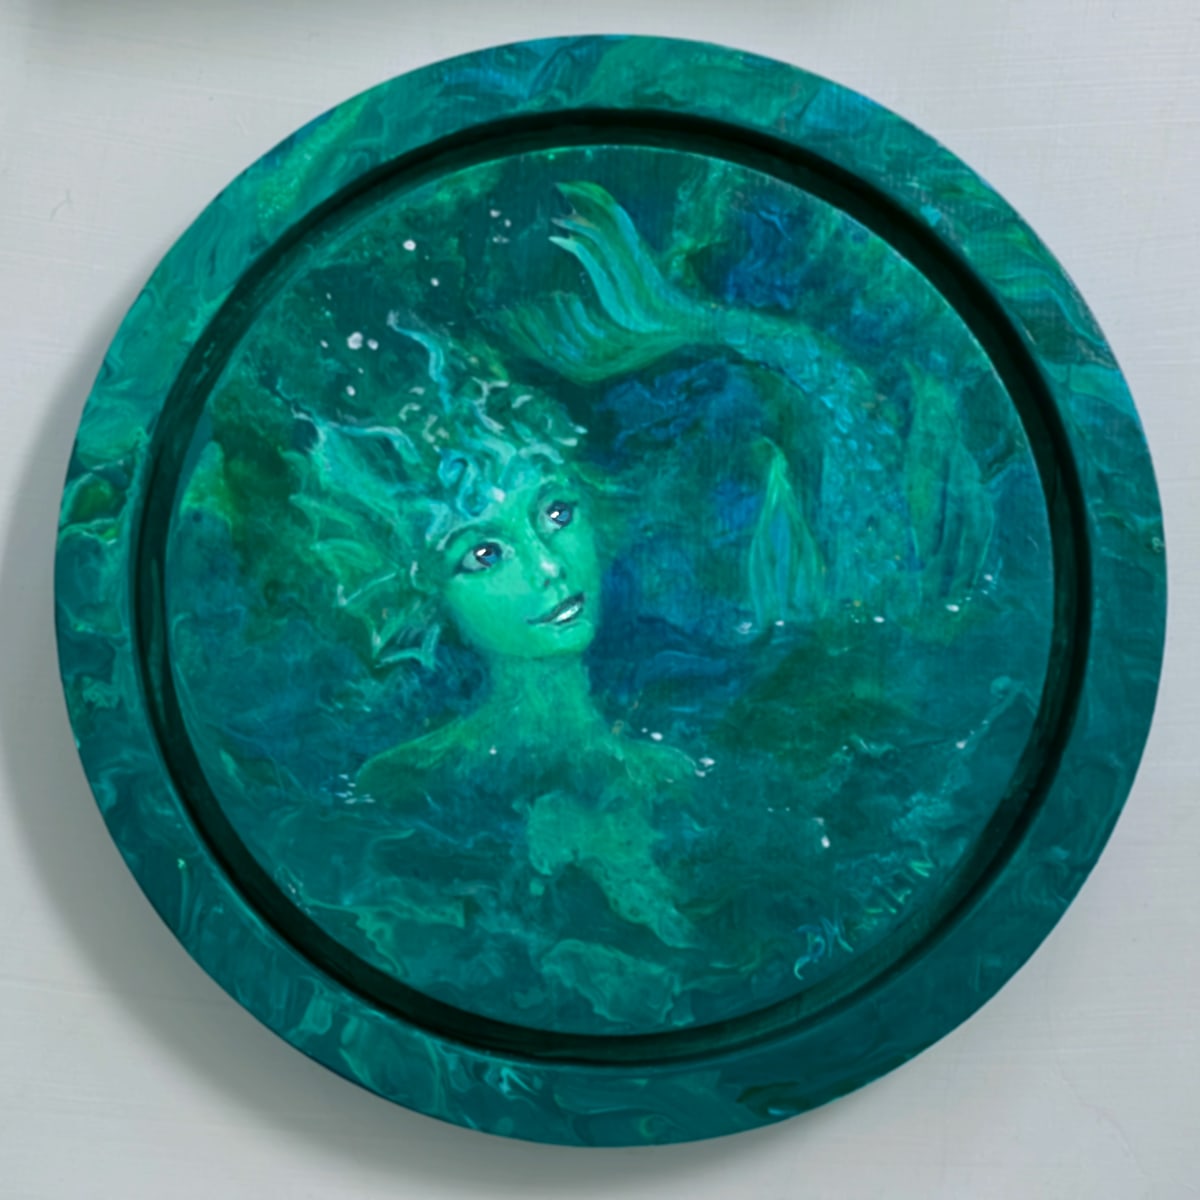 Mermaids Tale by Bonnie Hamlin  Image: What a tale a Mermaid could tell